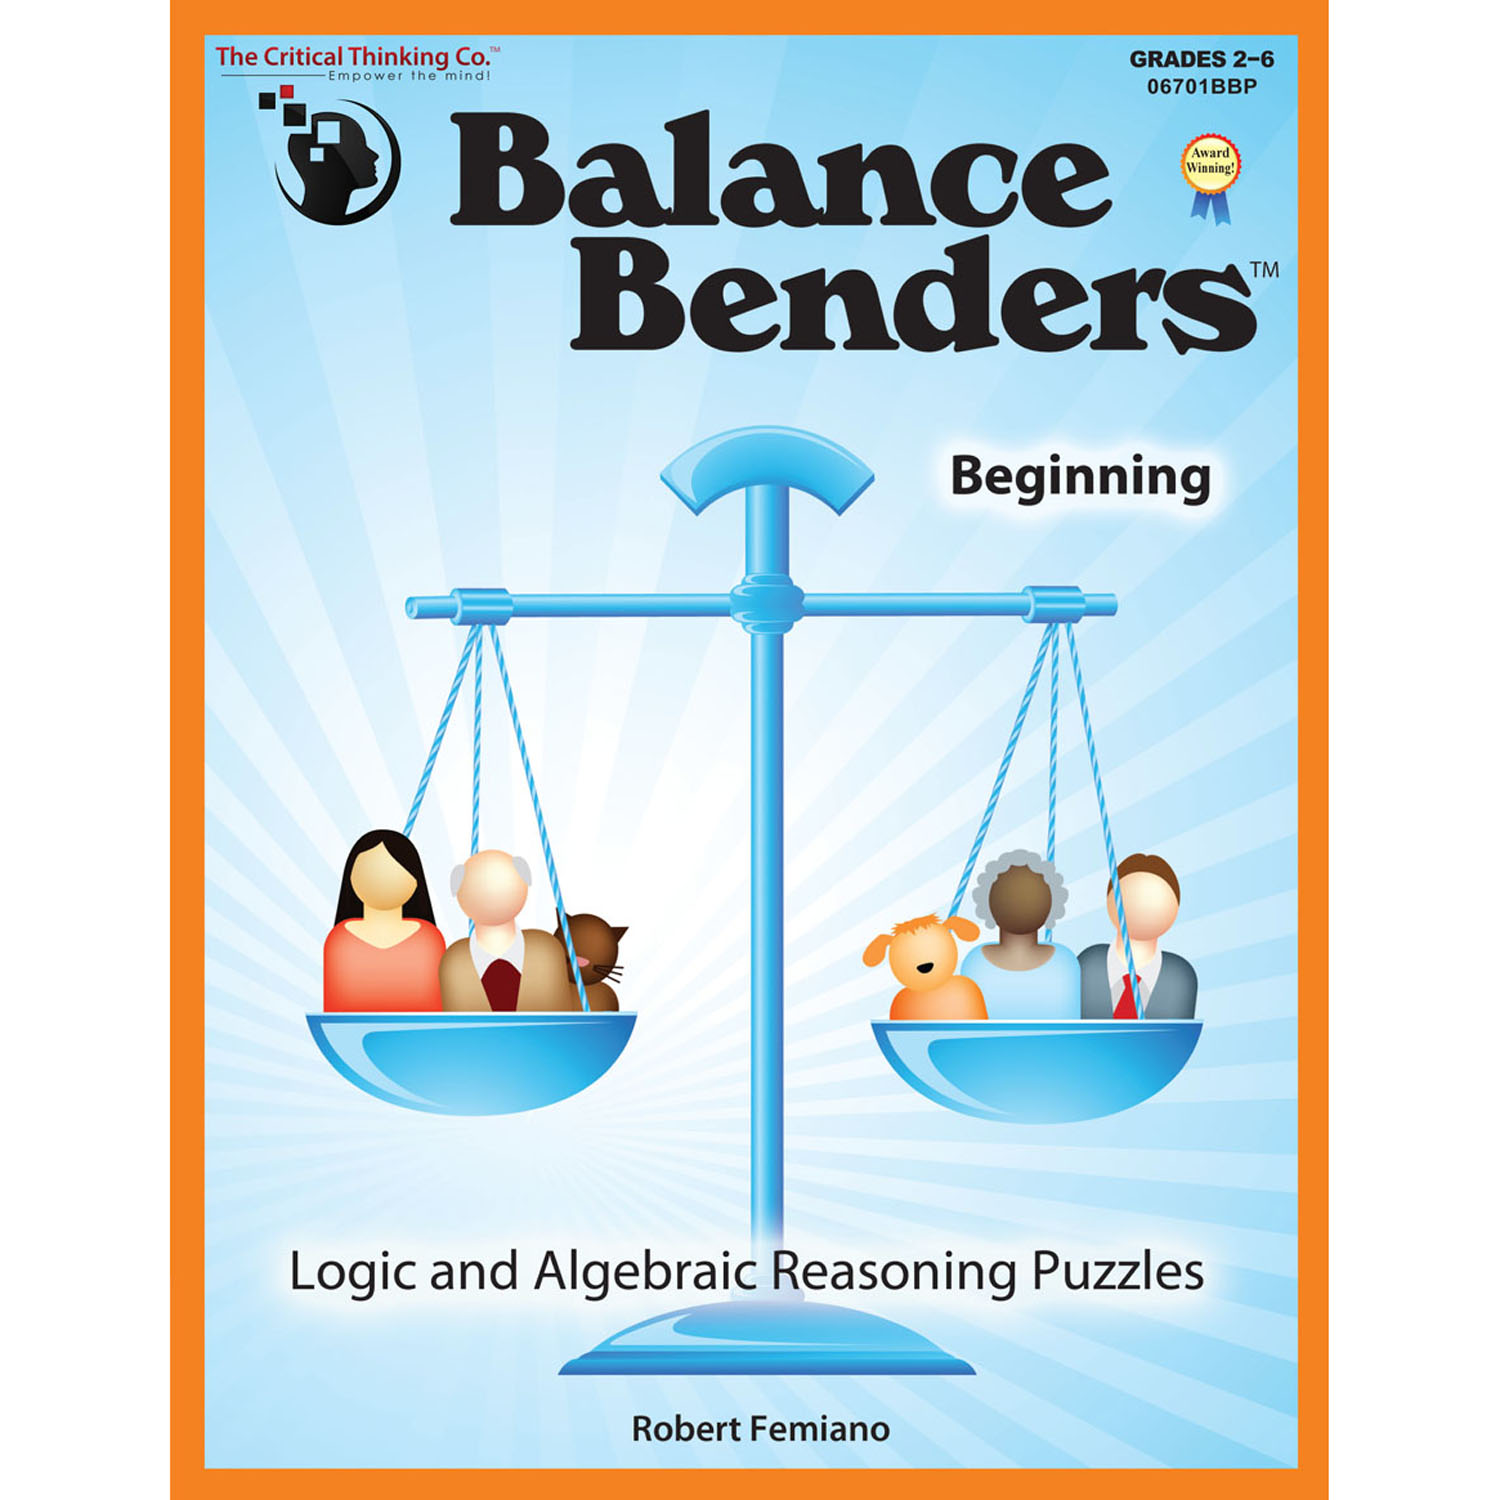 Balance Benders Beginning, Grades 2-6